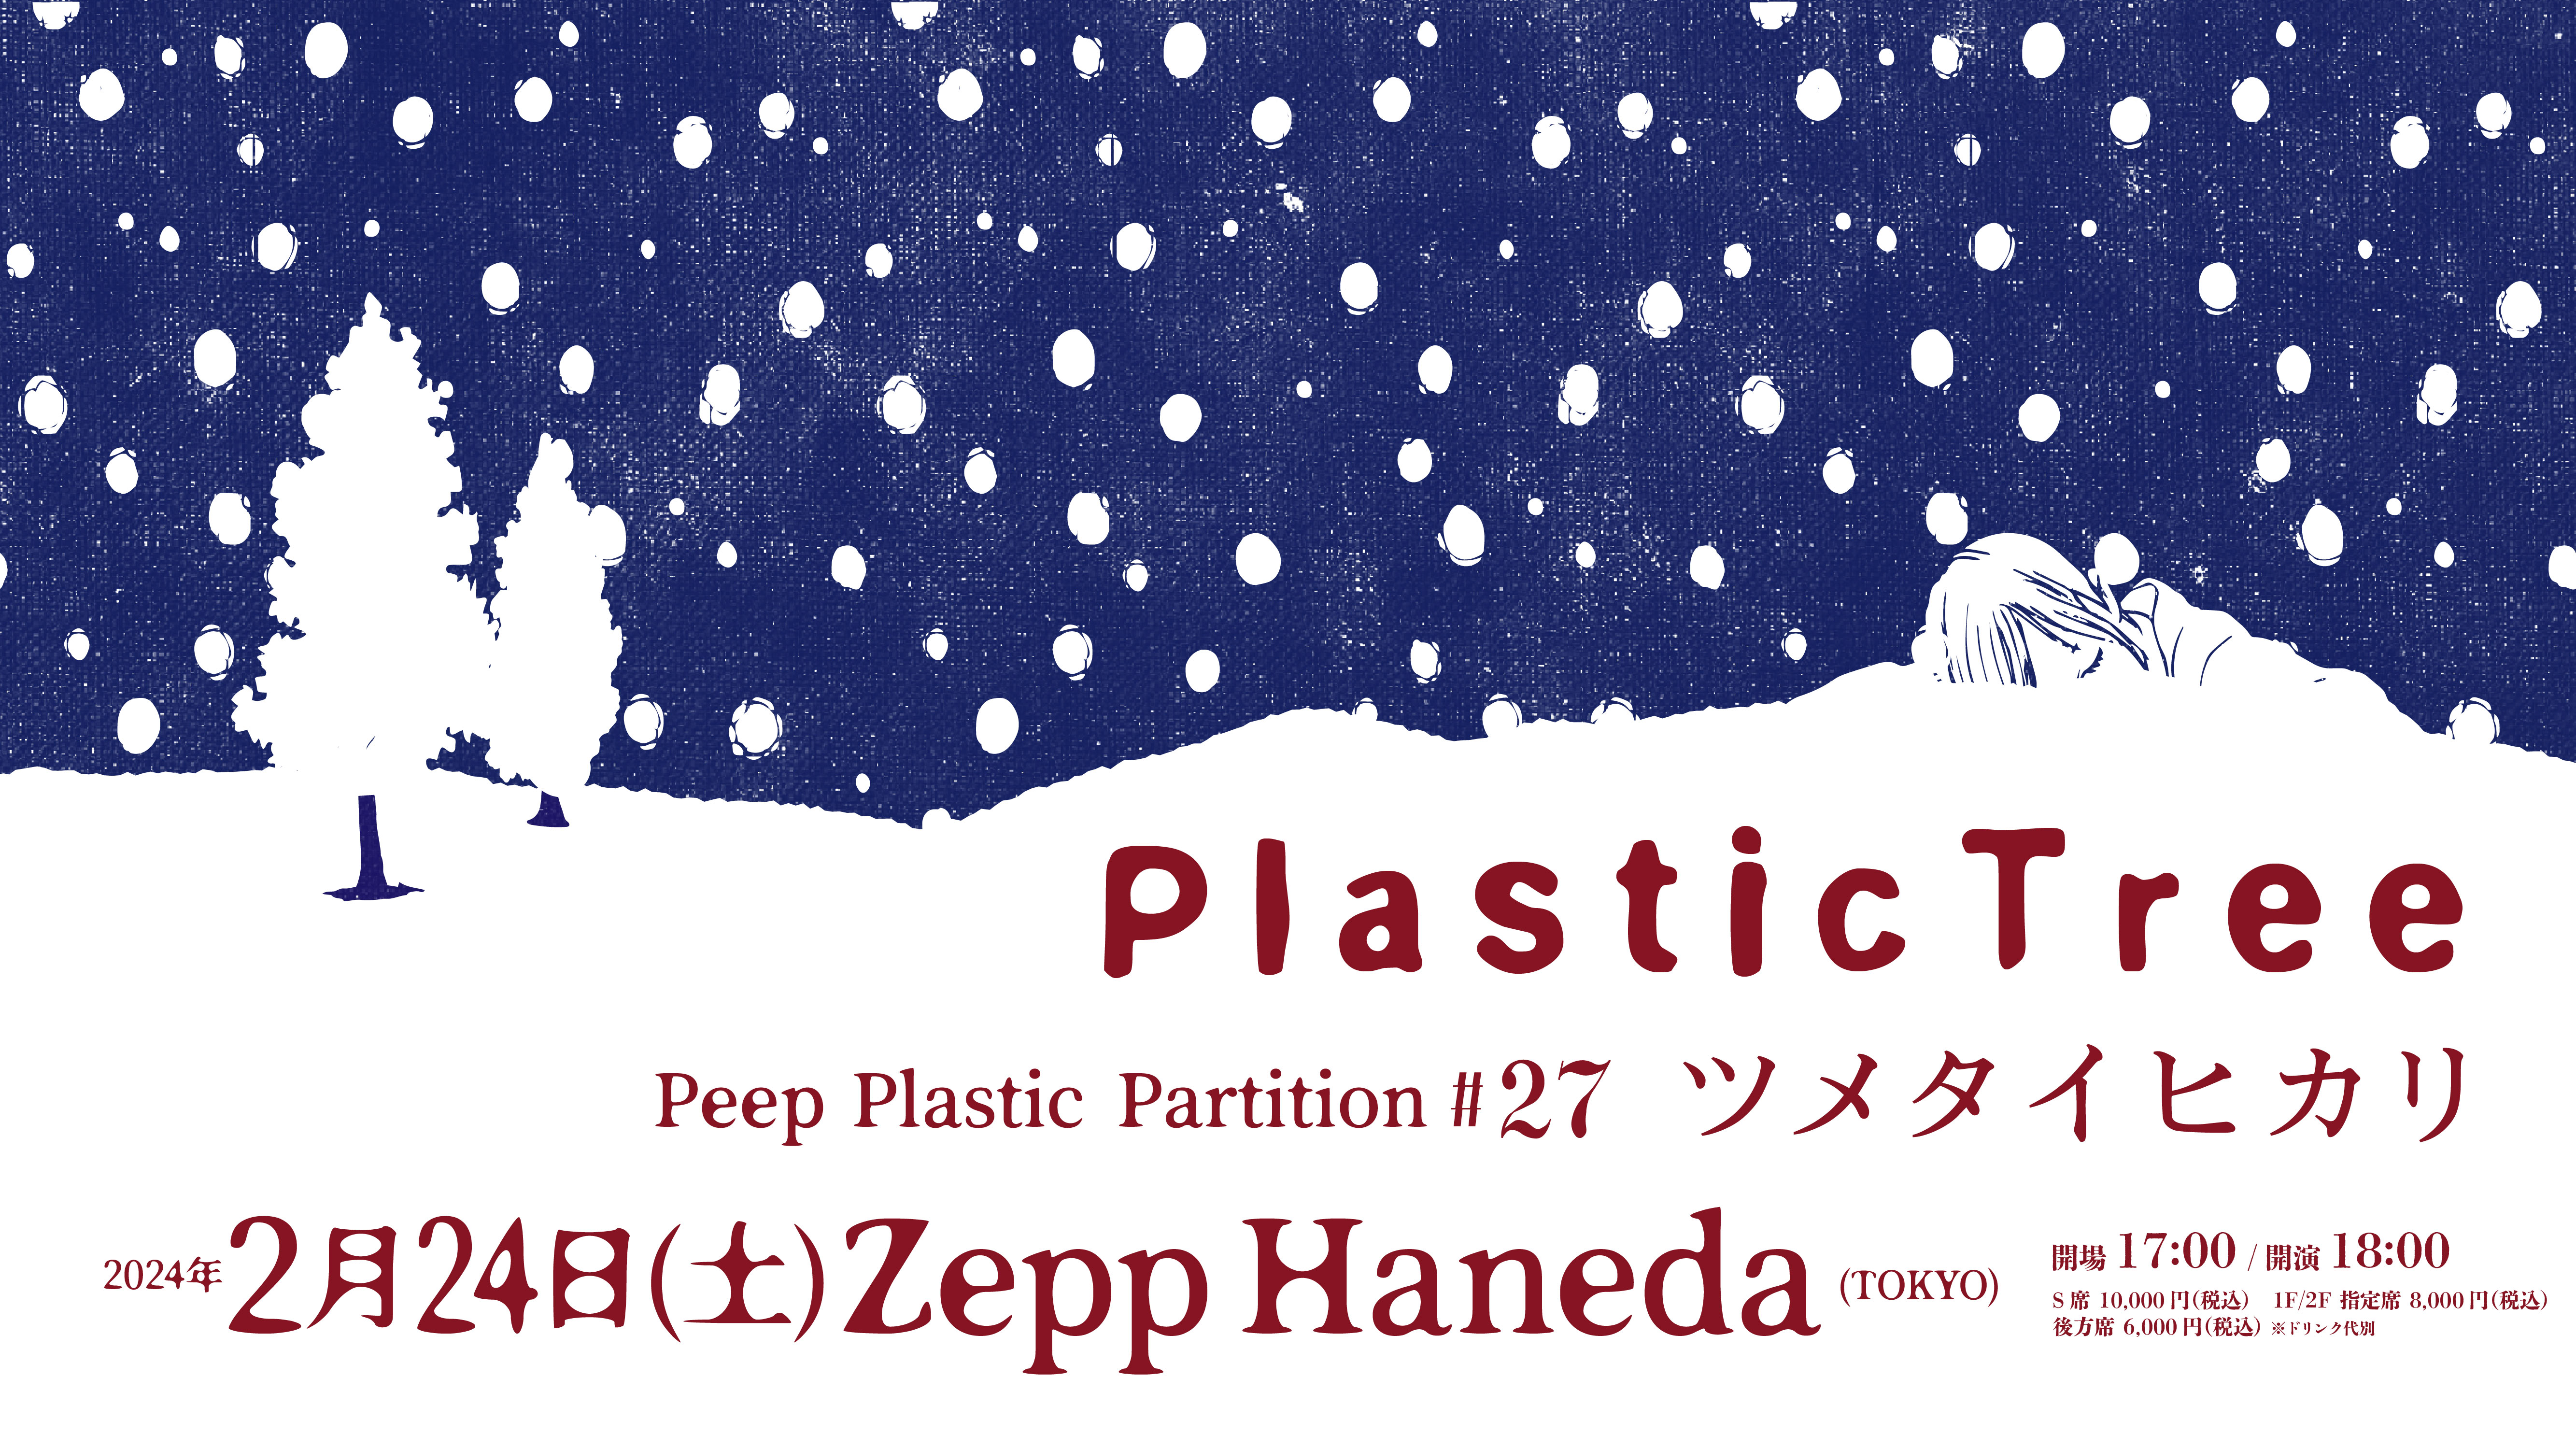 Plastic Tree「Peep Plastic Partition」#26 ざわめき、#27 ツメタイ 